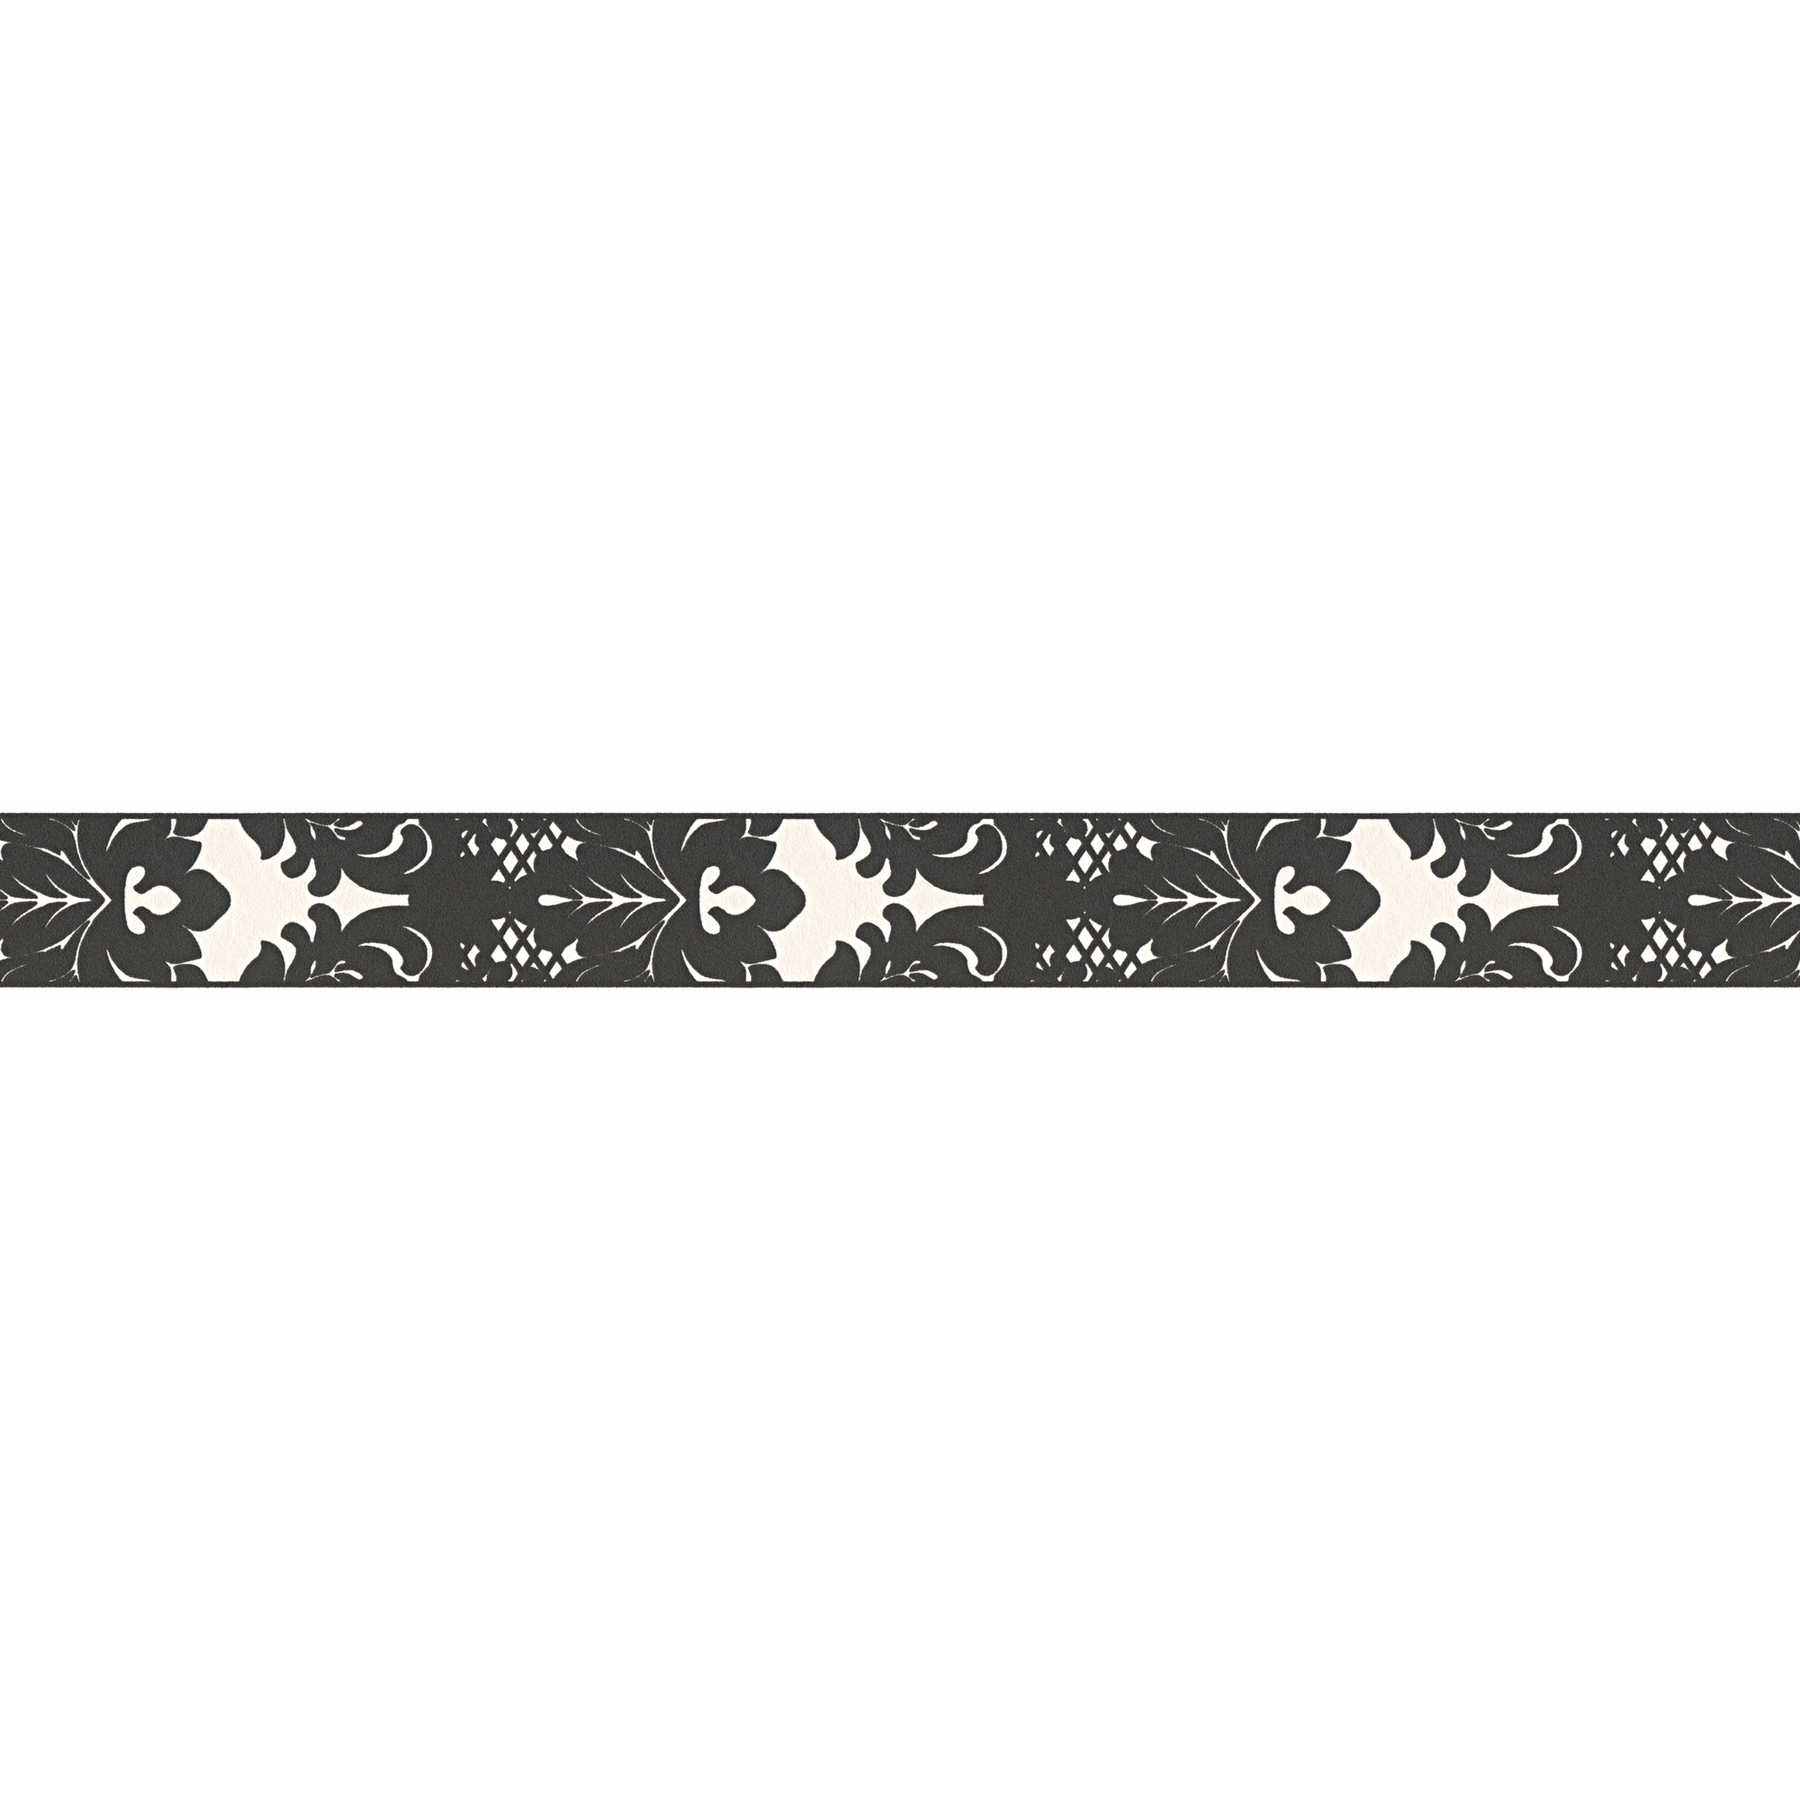         Tapetenbordüre Schwarz-Weiß Barock Muster
    